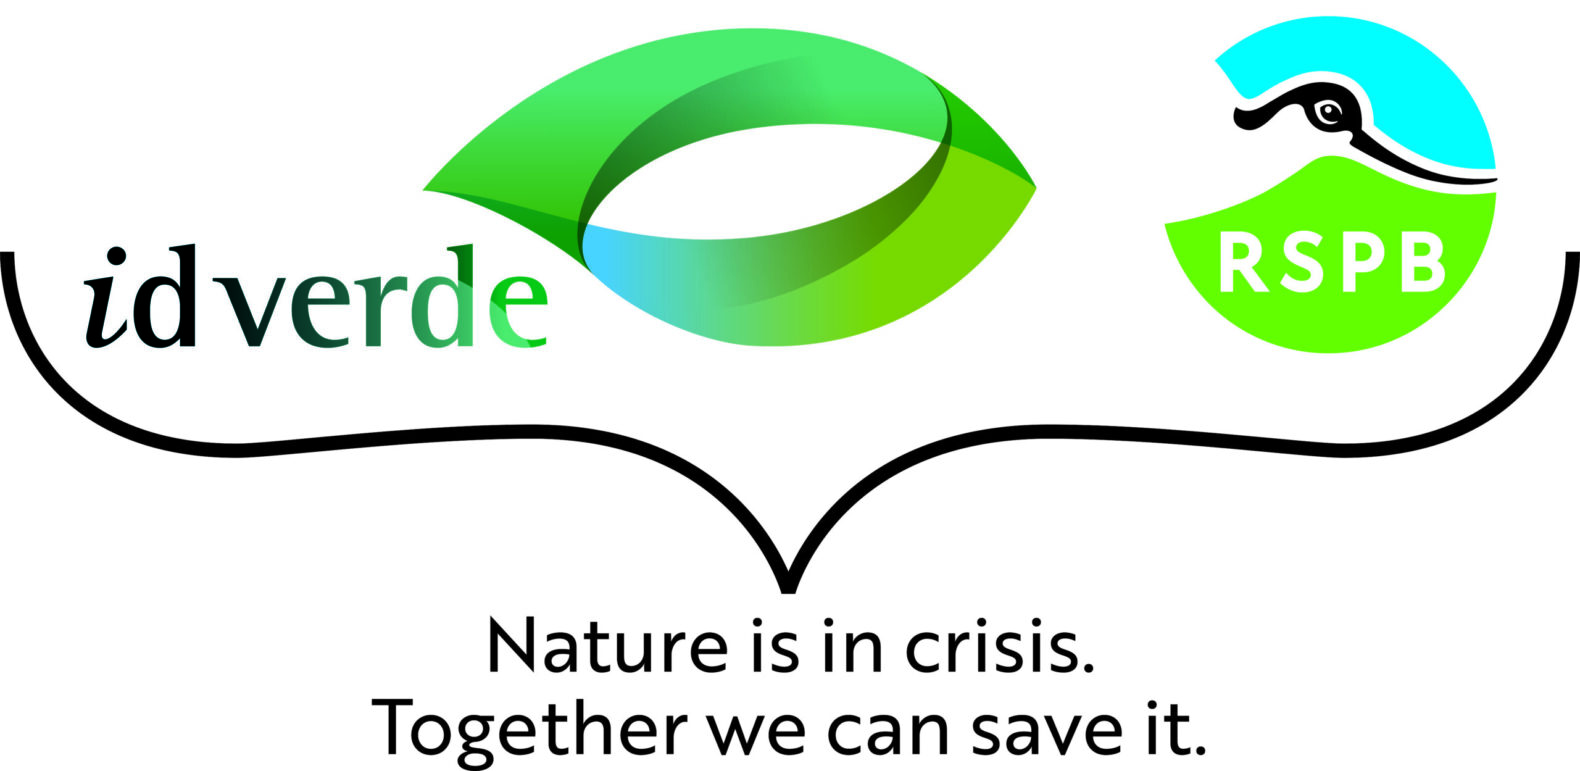 idverde and RSPB partnership logo